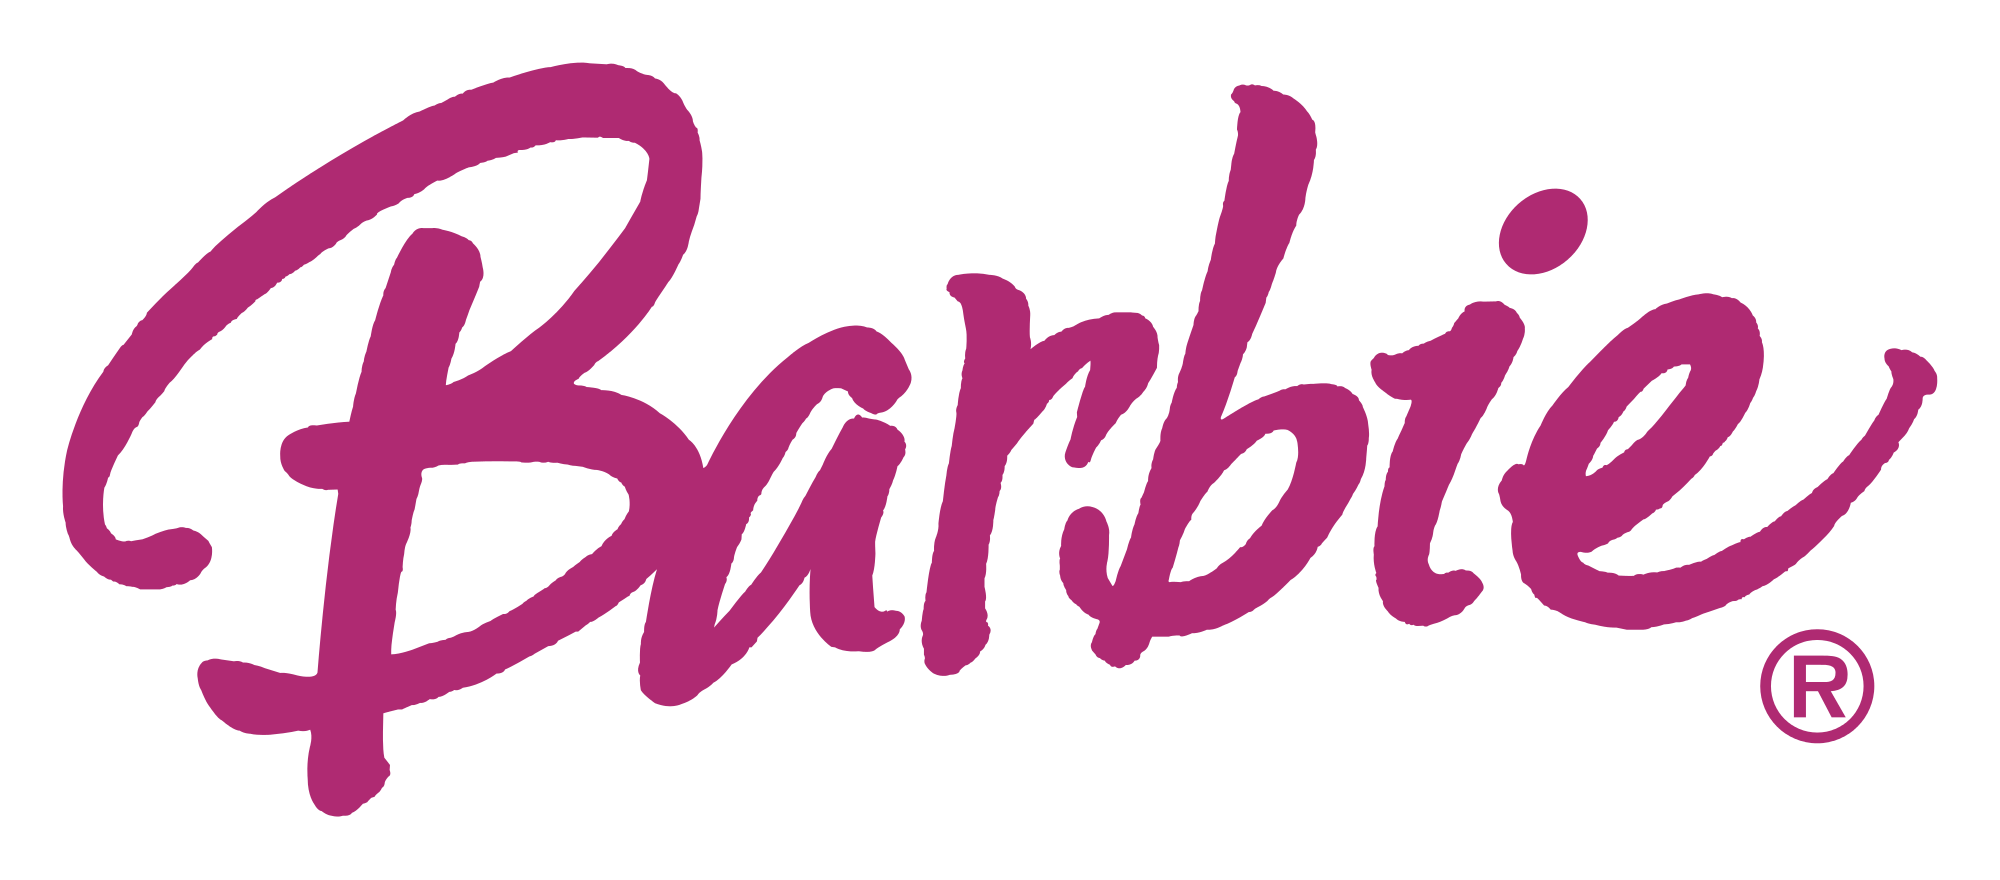 Free Barbie Logo Png, Download Free Barbie Logo Png png images, Free